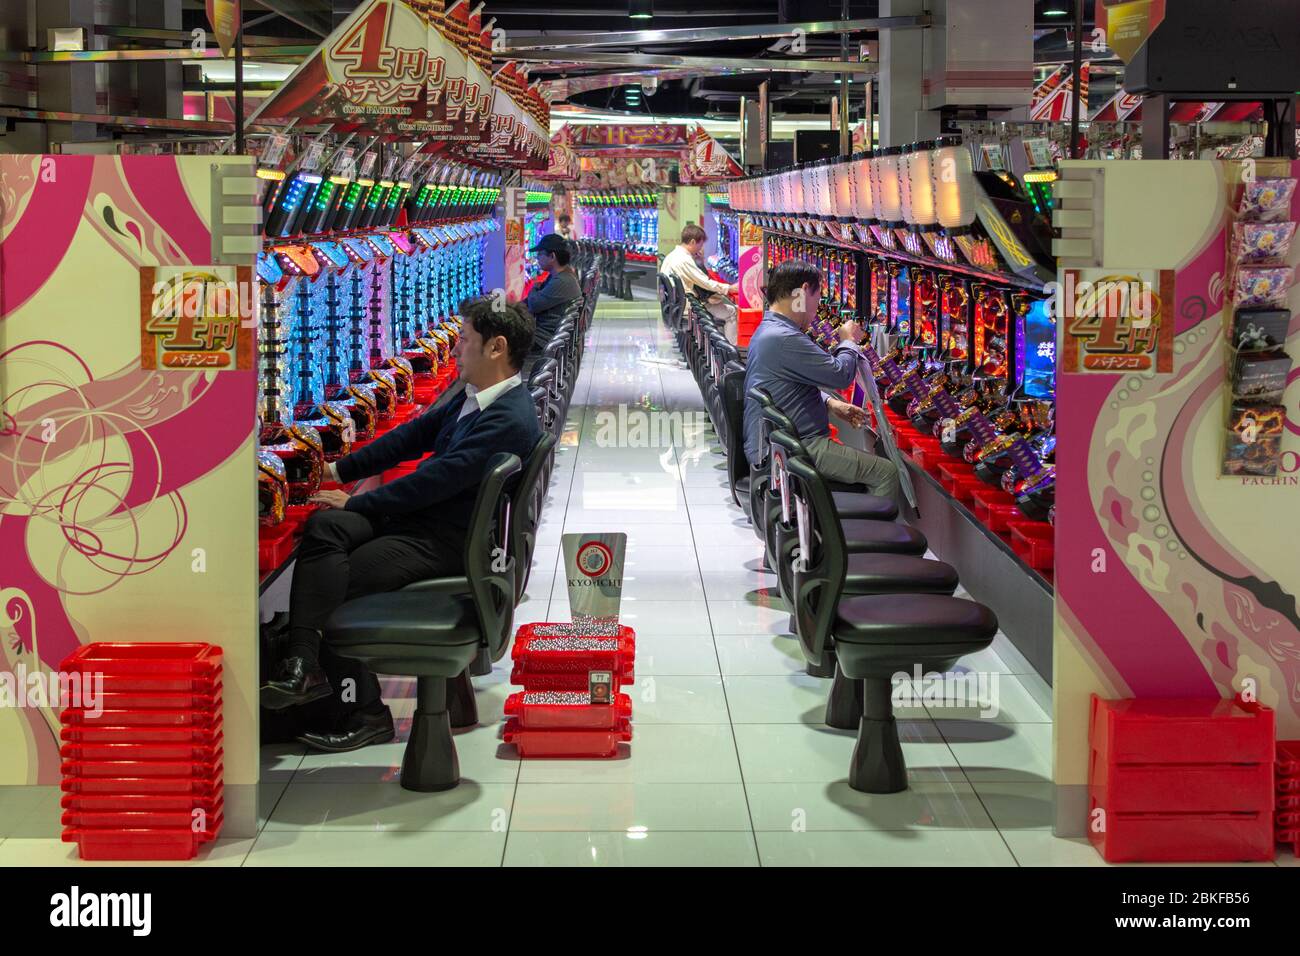 Osaka / Japan - October 6, 2017: People gambling on Pachinko slot machines in Osaka, Japan Stock Photo